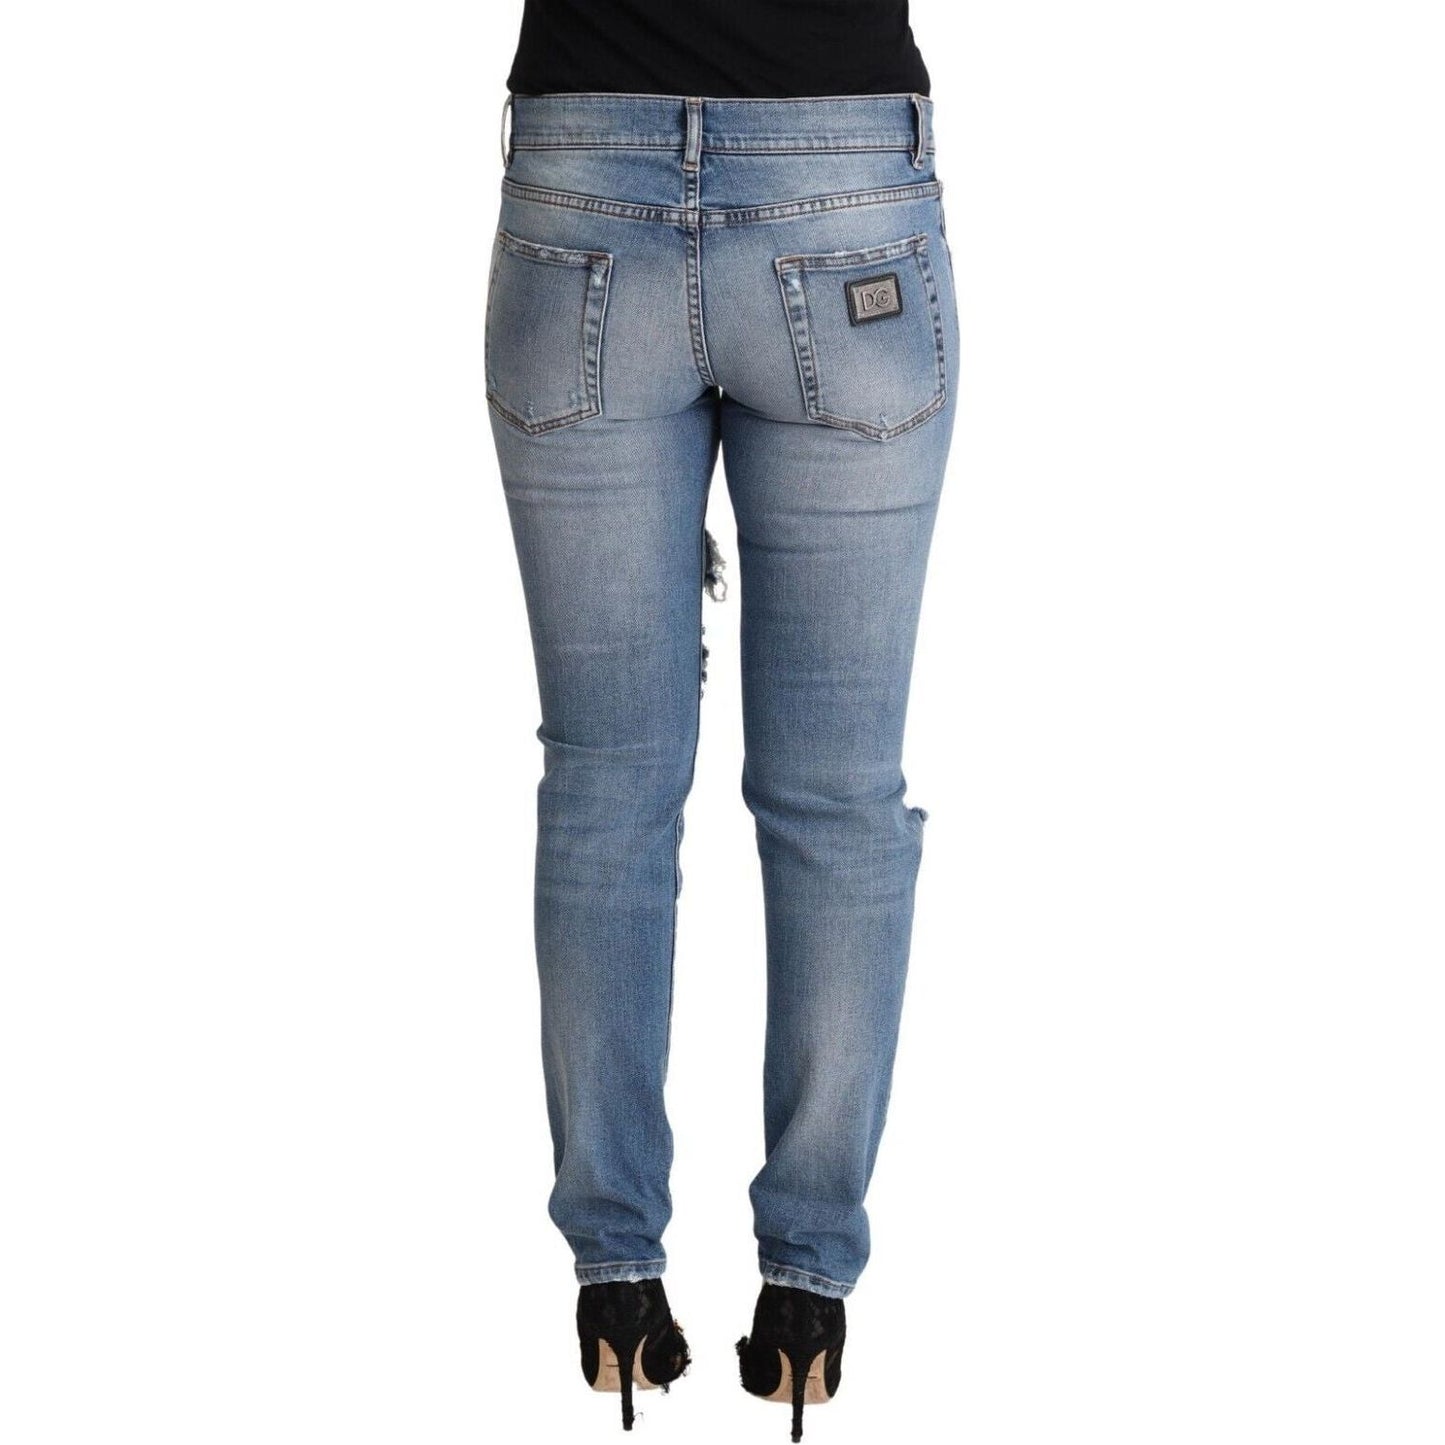 Dolce & Gabbana Chic Distressed Denim Skinny Jeans blue-distressed-cotton-denim-skinny-jeans